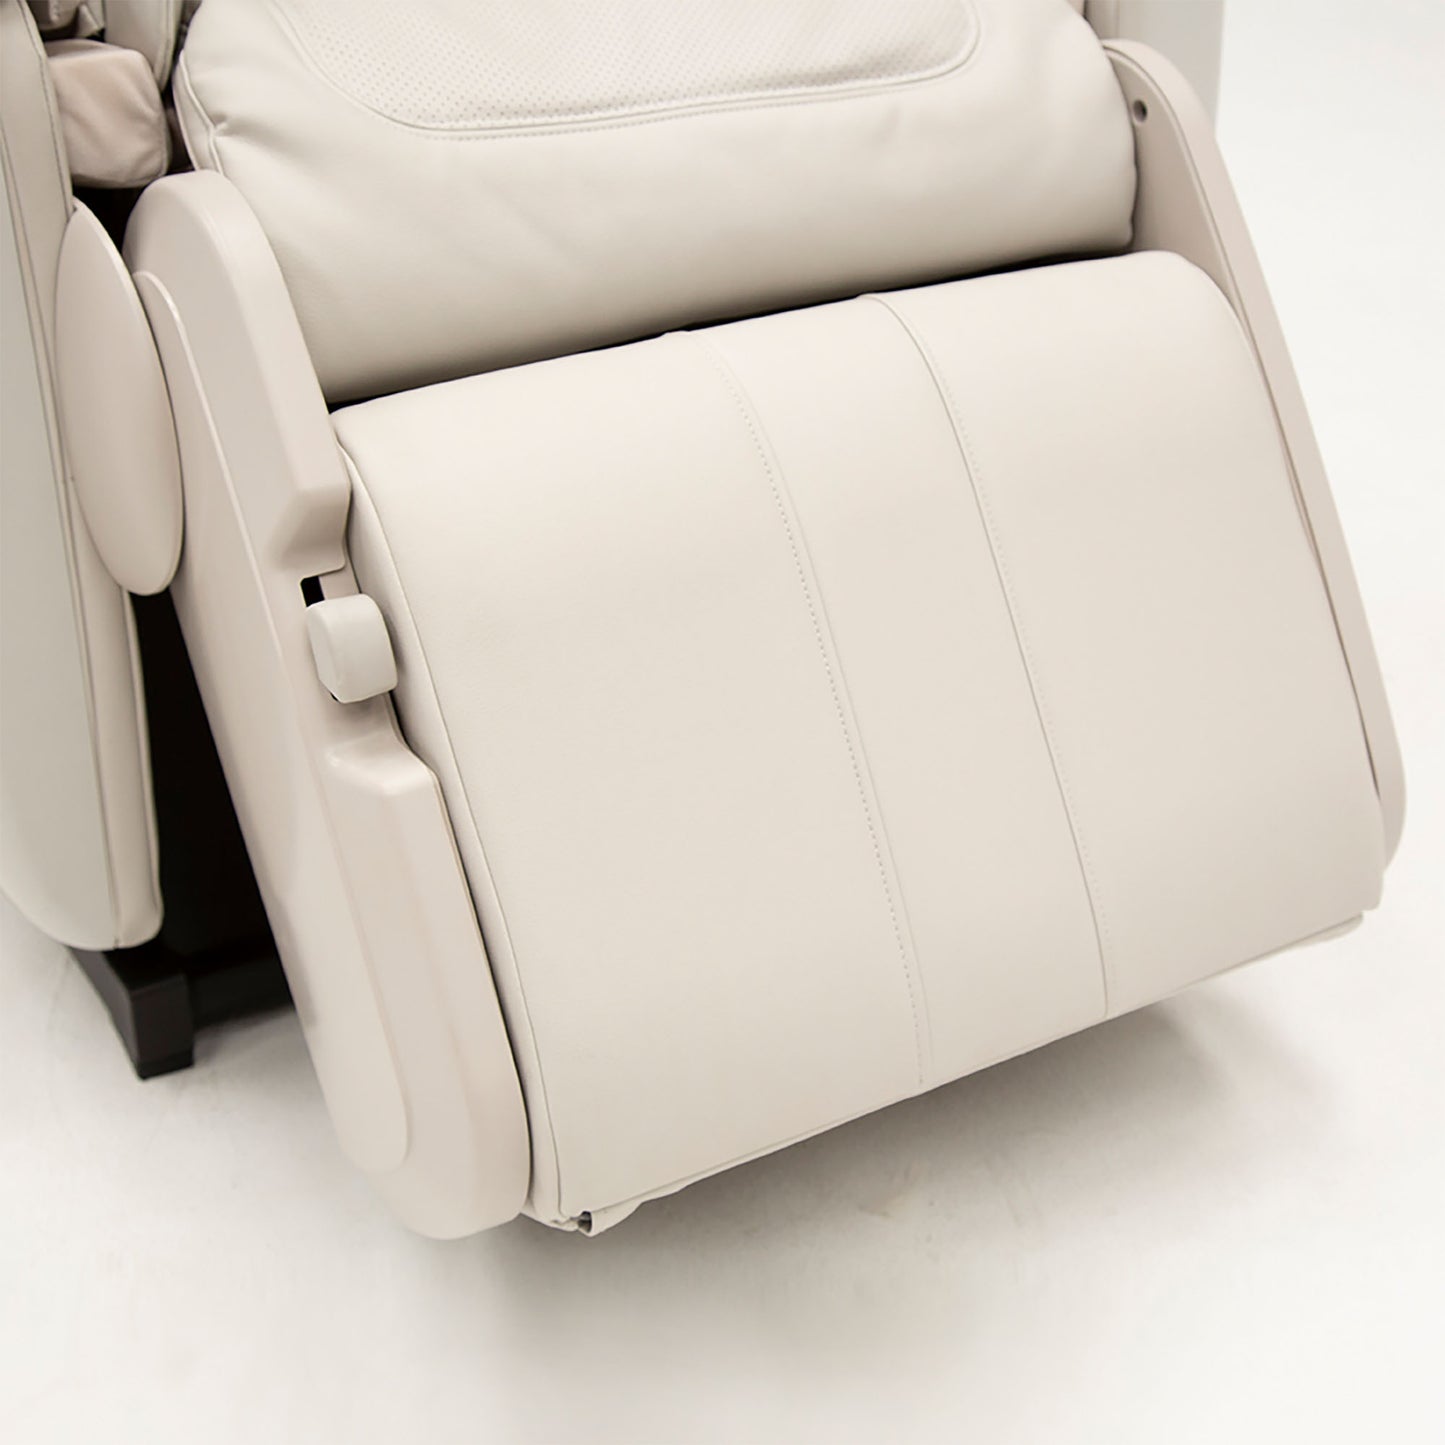 Synca Kagra - 4D Premium Massage chair